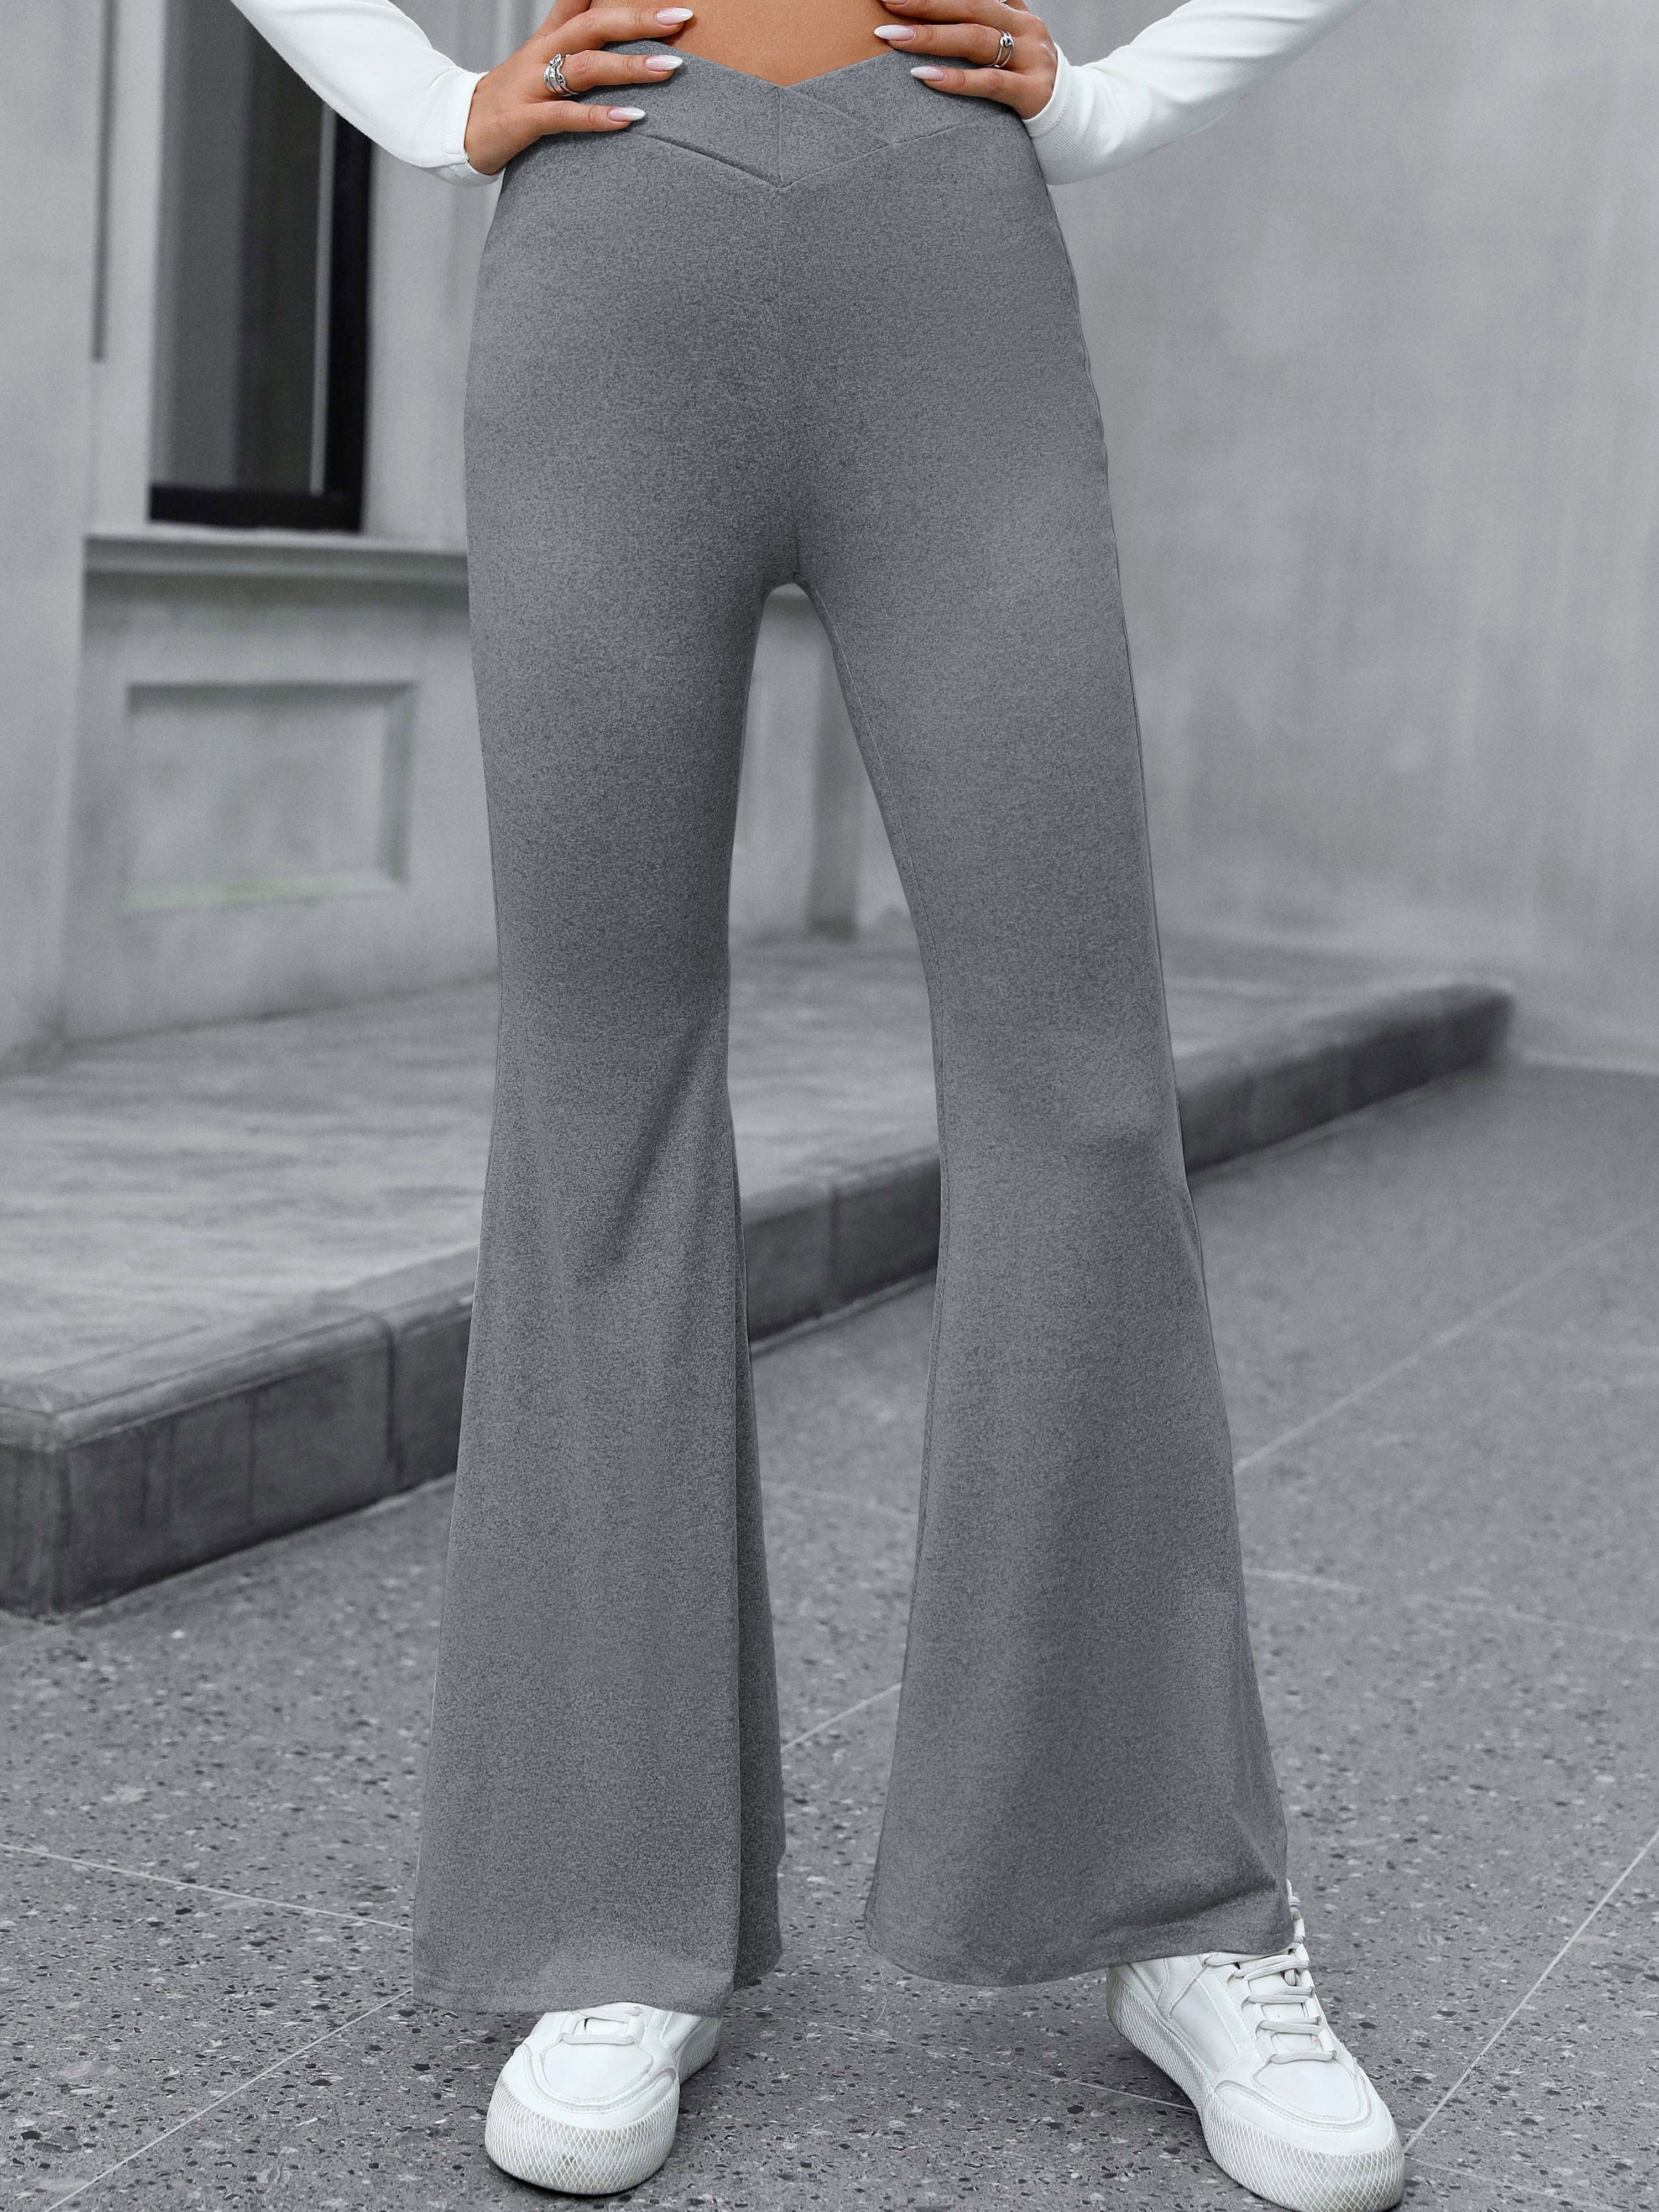 TERNEZ Pants for Women Solid Flare Leg Pants (Color : Dark Grey